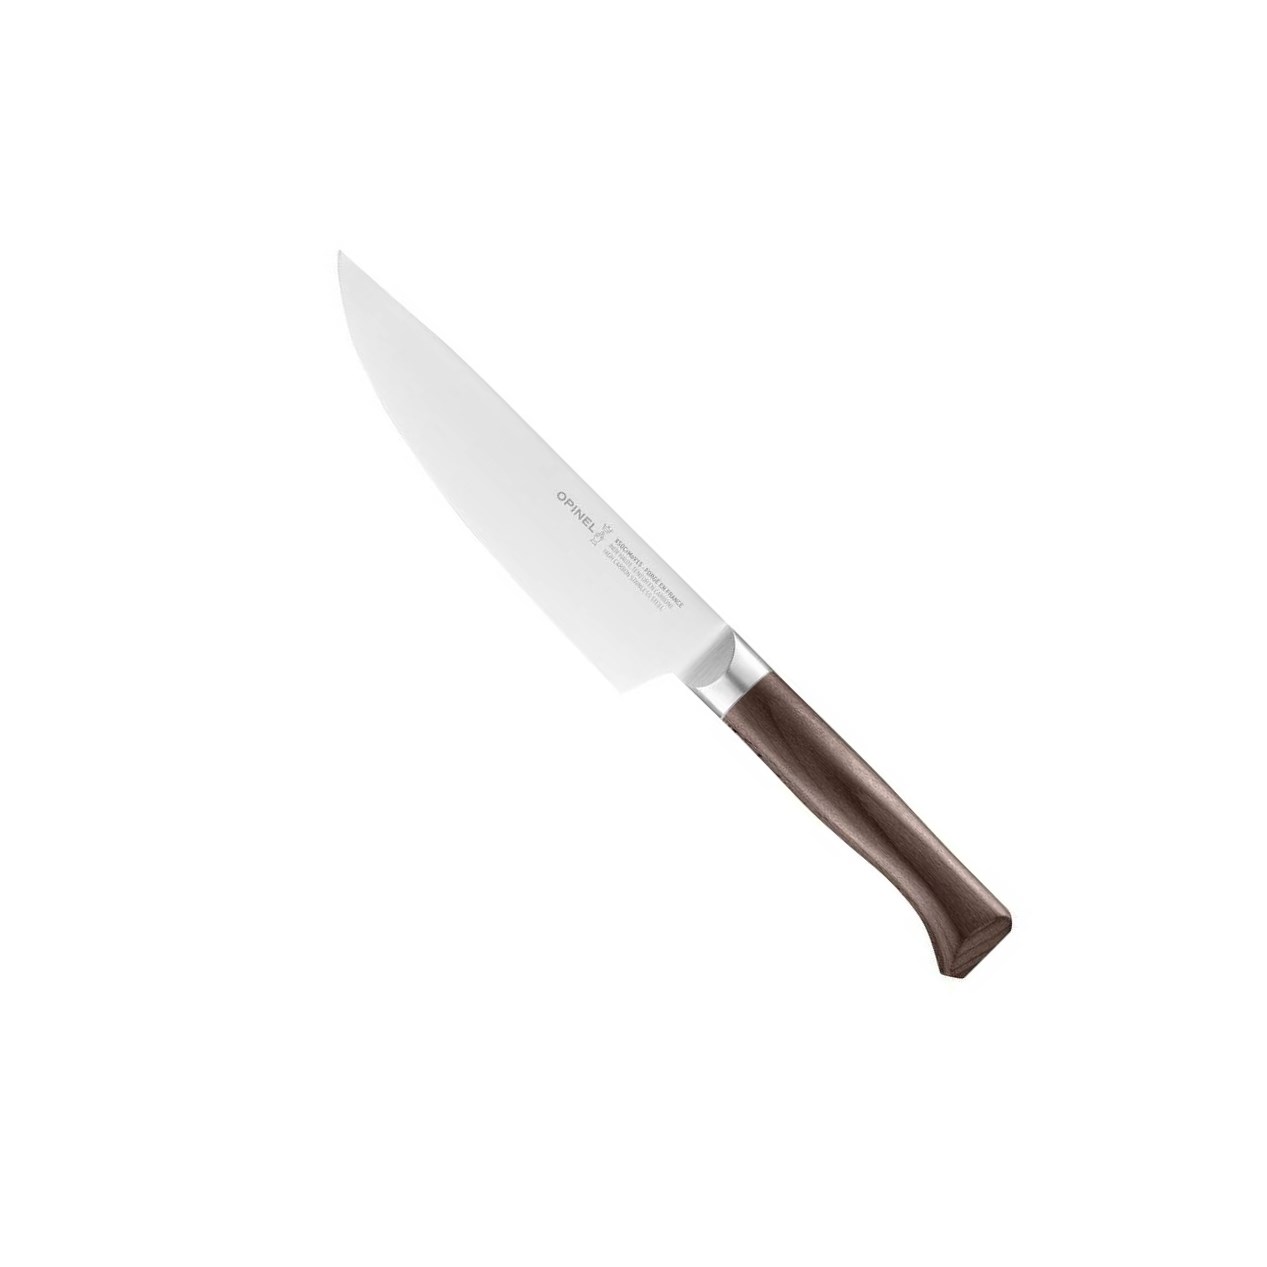 Kuchařský nůž Les Forges 1890, 17 cm - Opinel